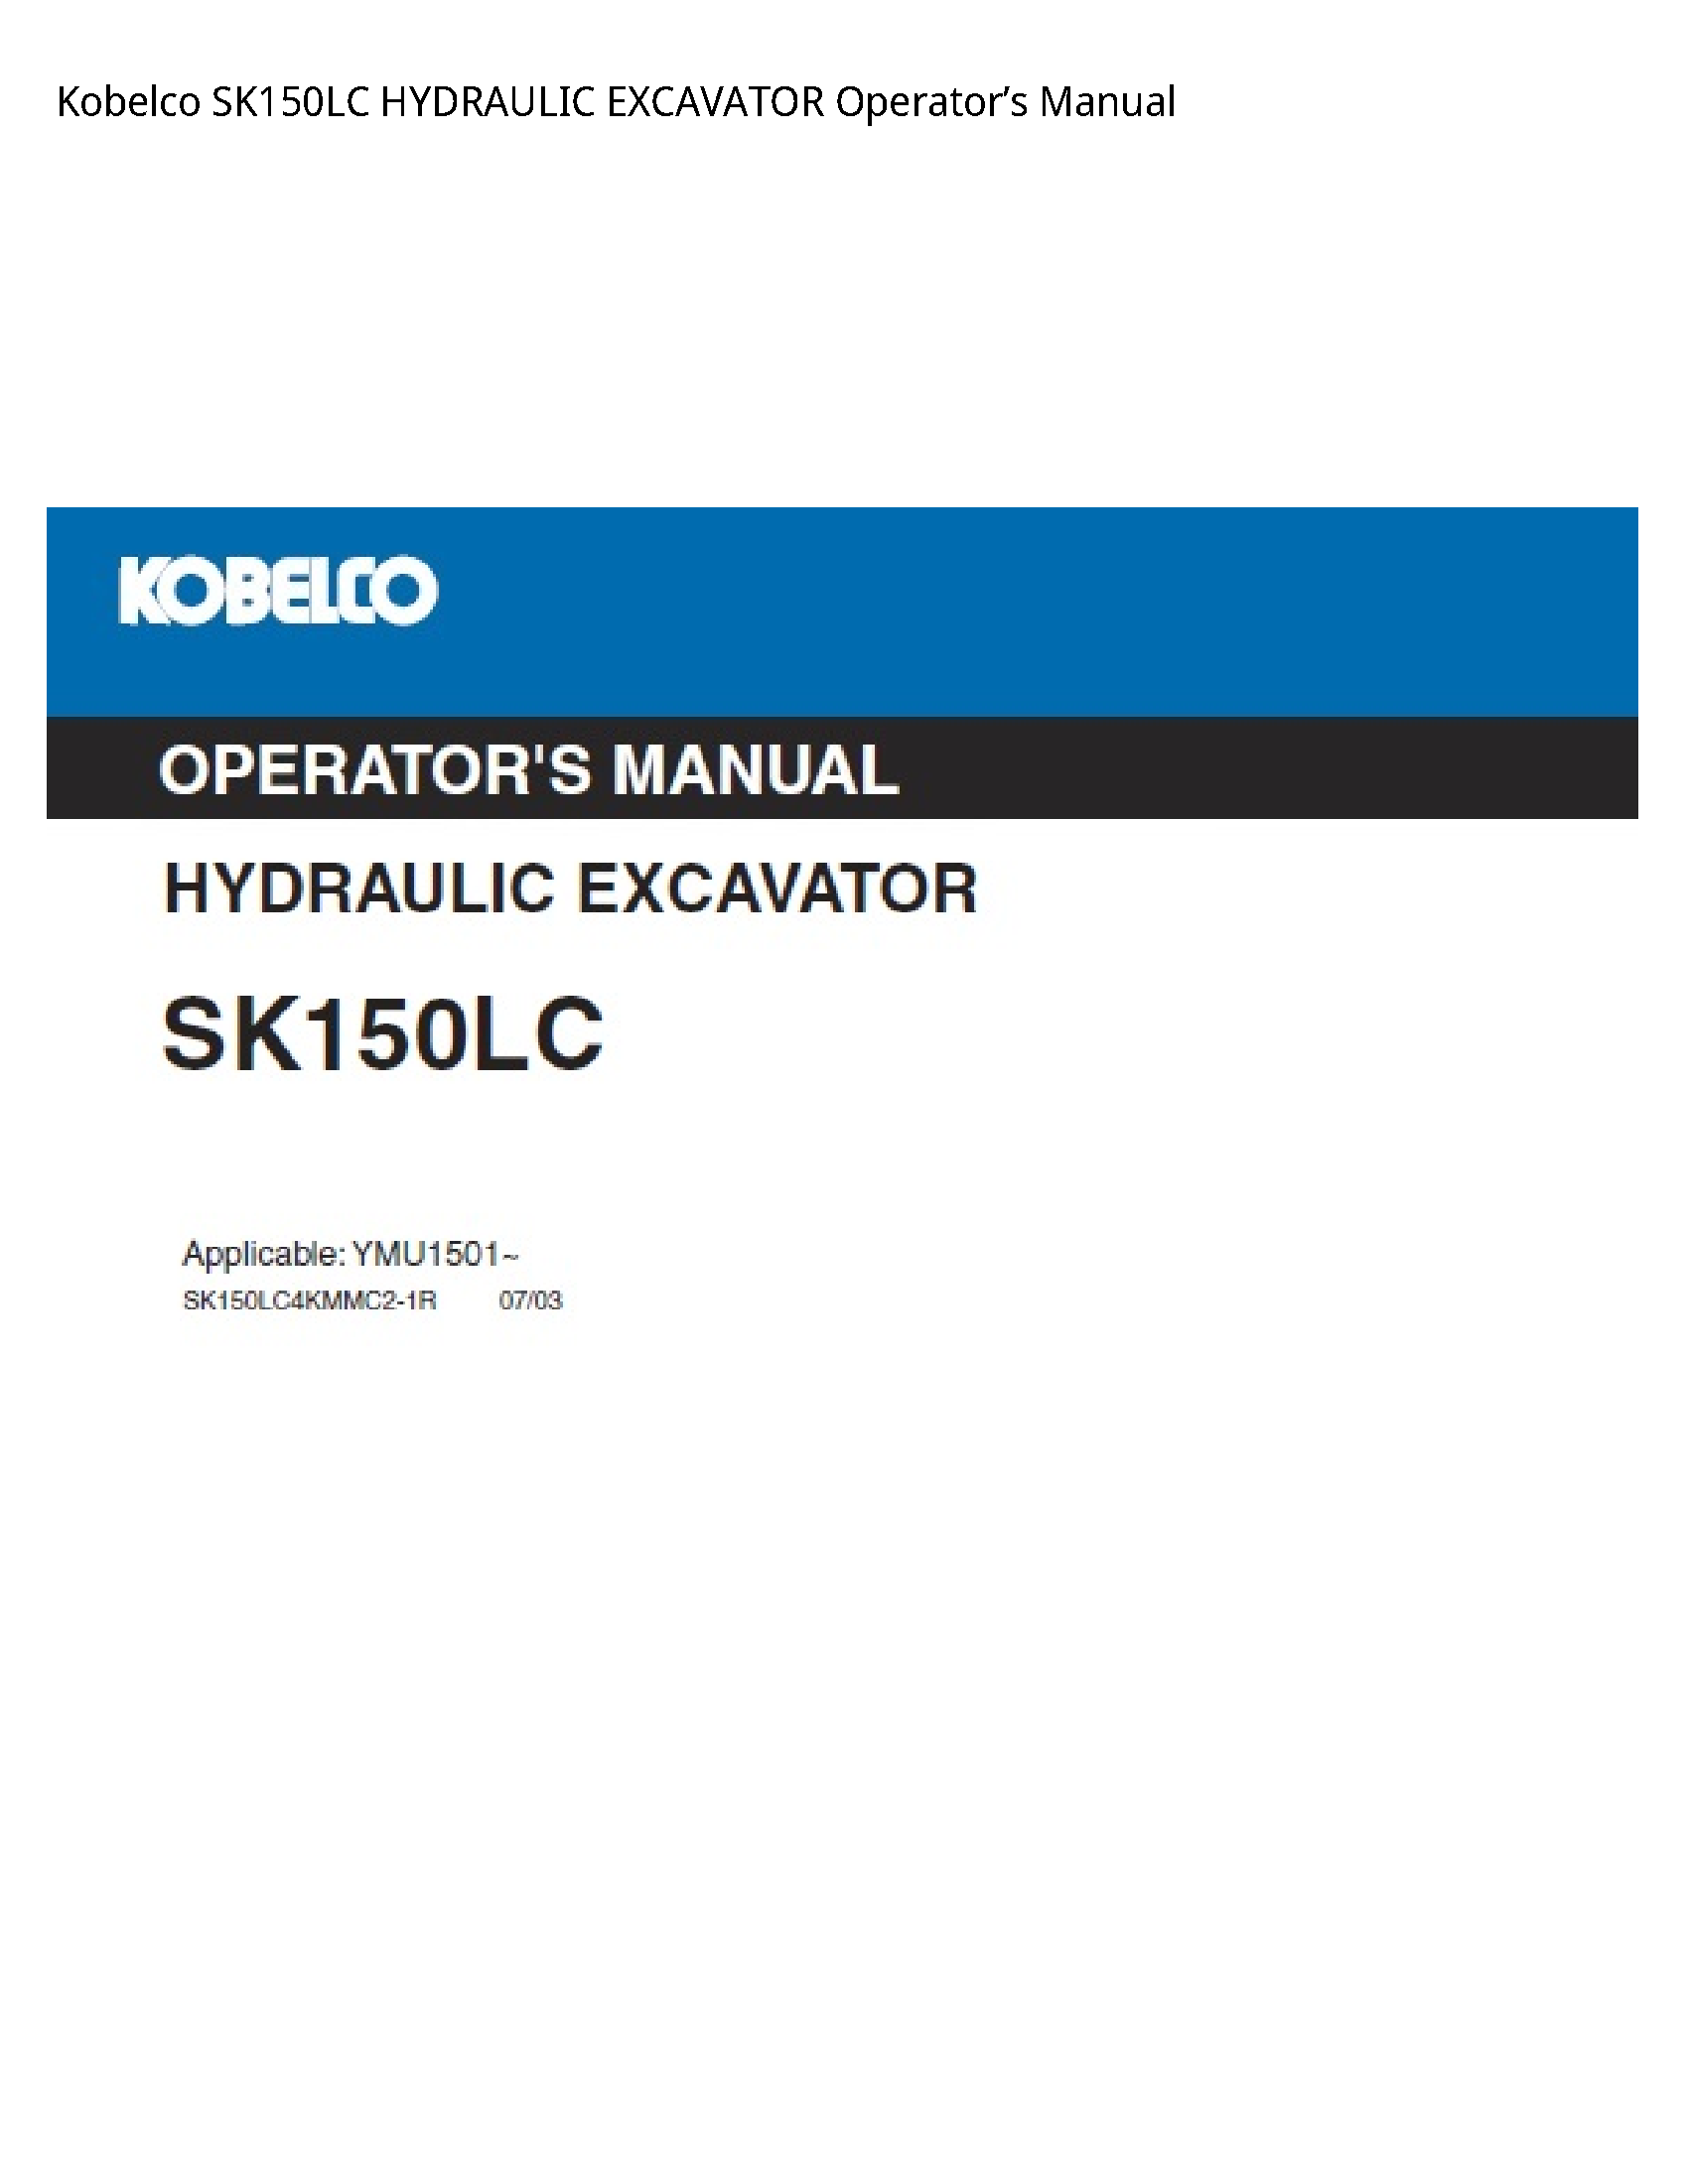 Kobelco SK150LC HYDRAULIC EXCAVATOR Operator’s manual